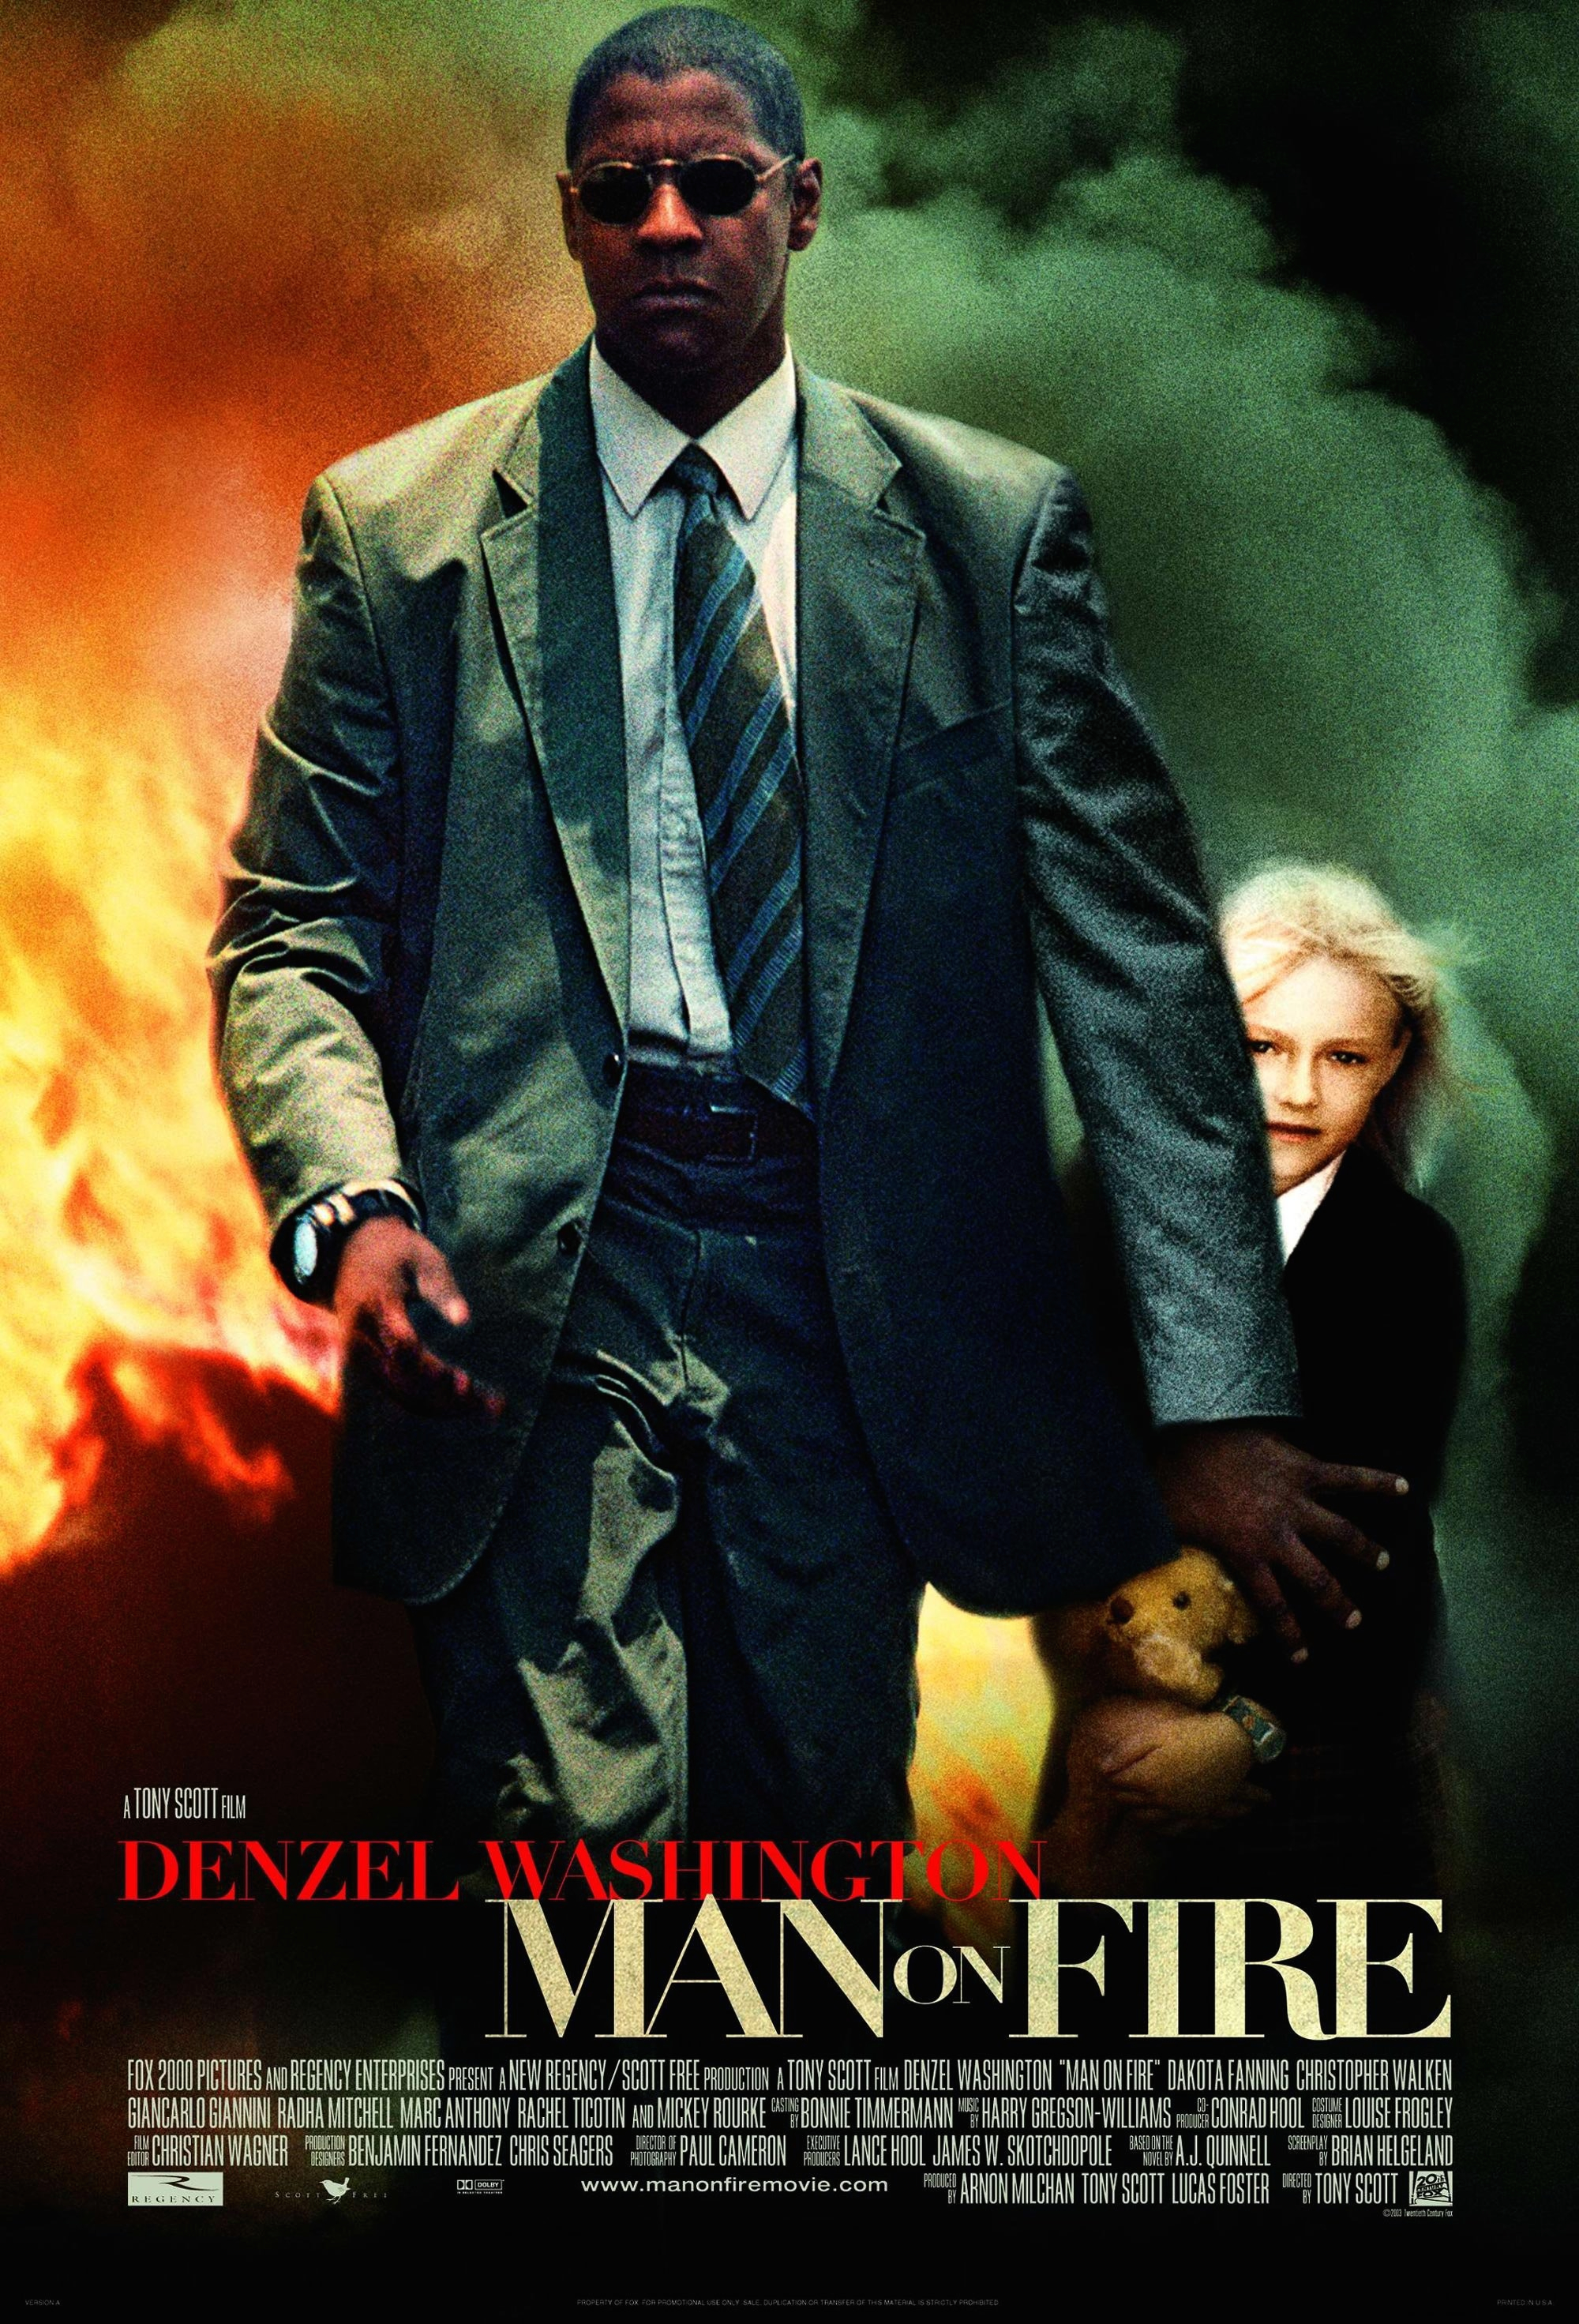 2004-Man On Fire.jpg